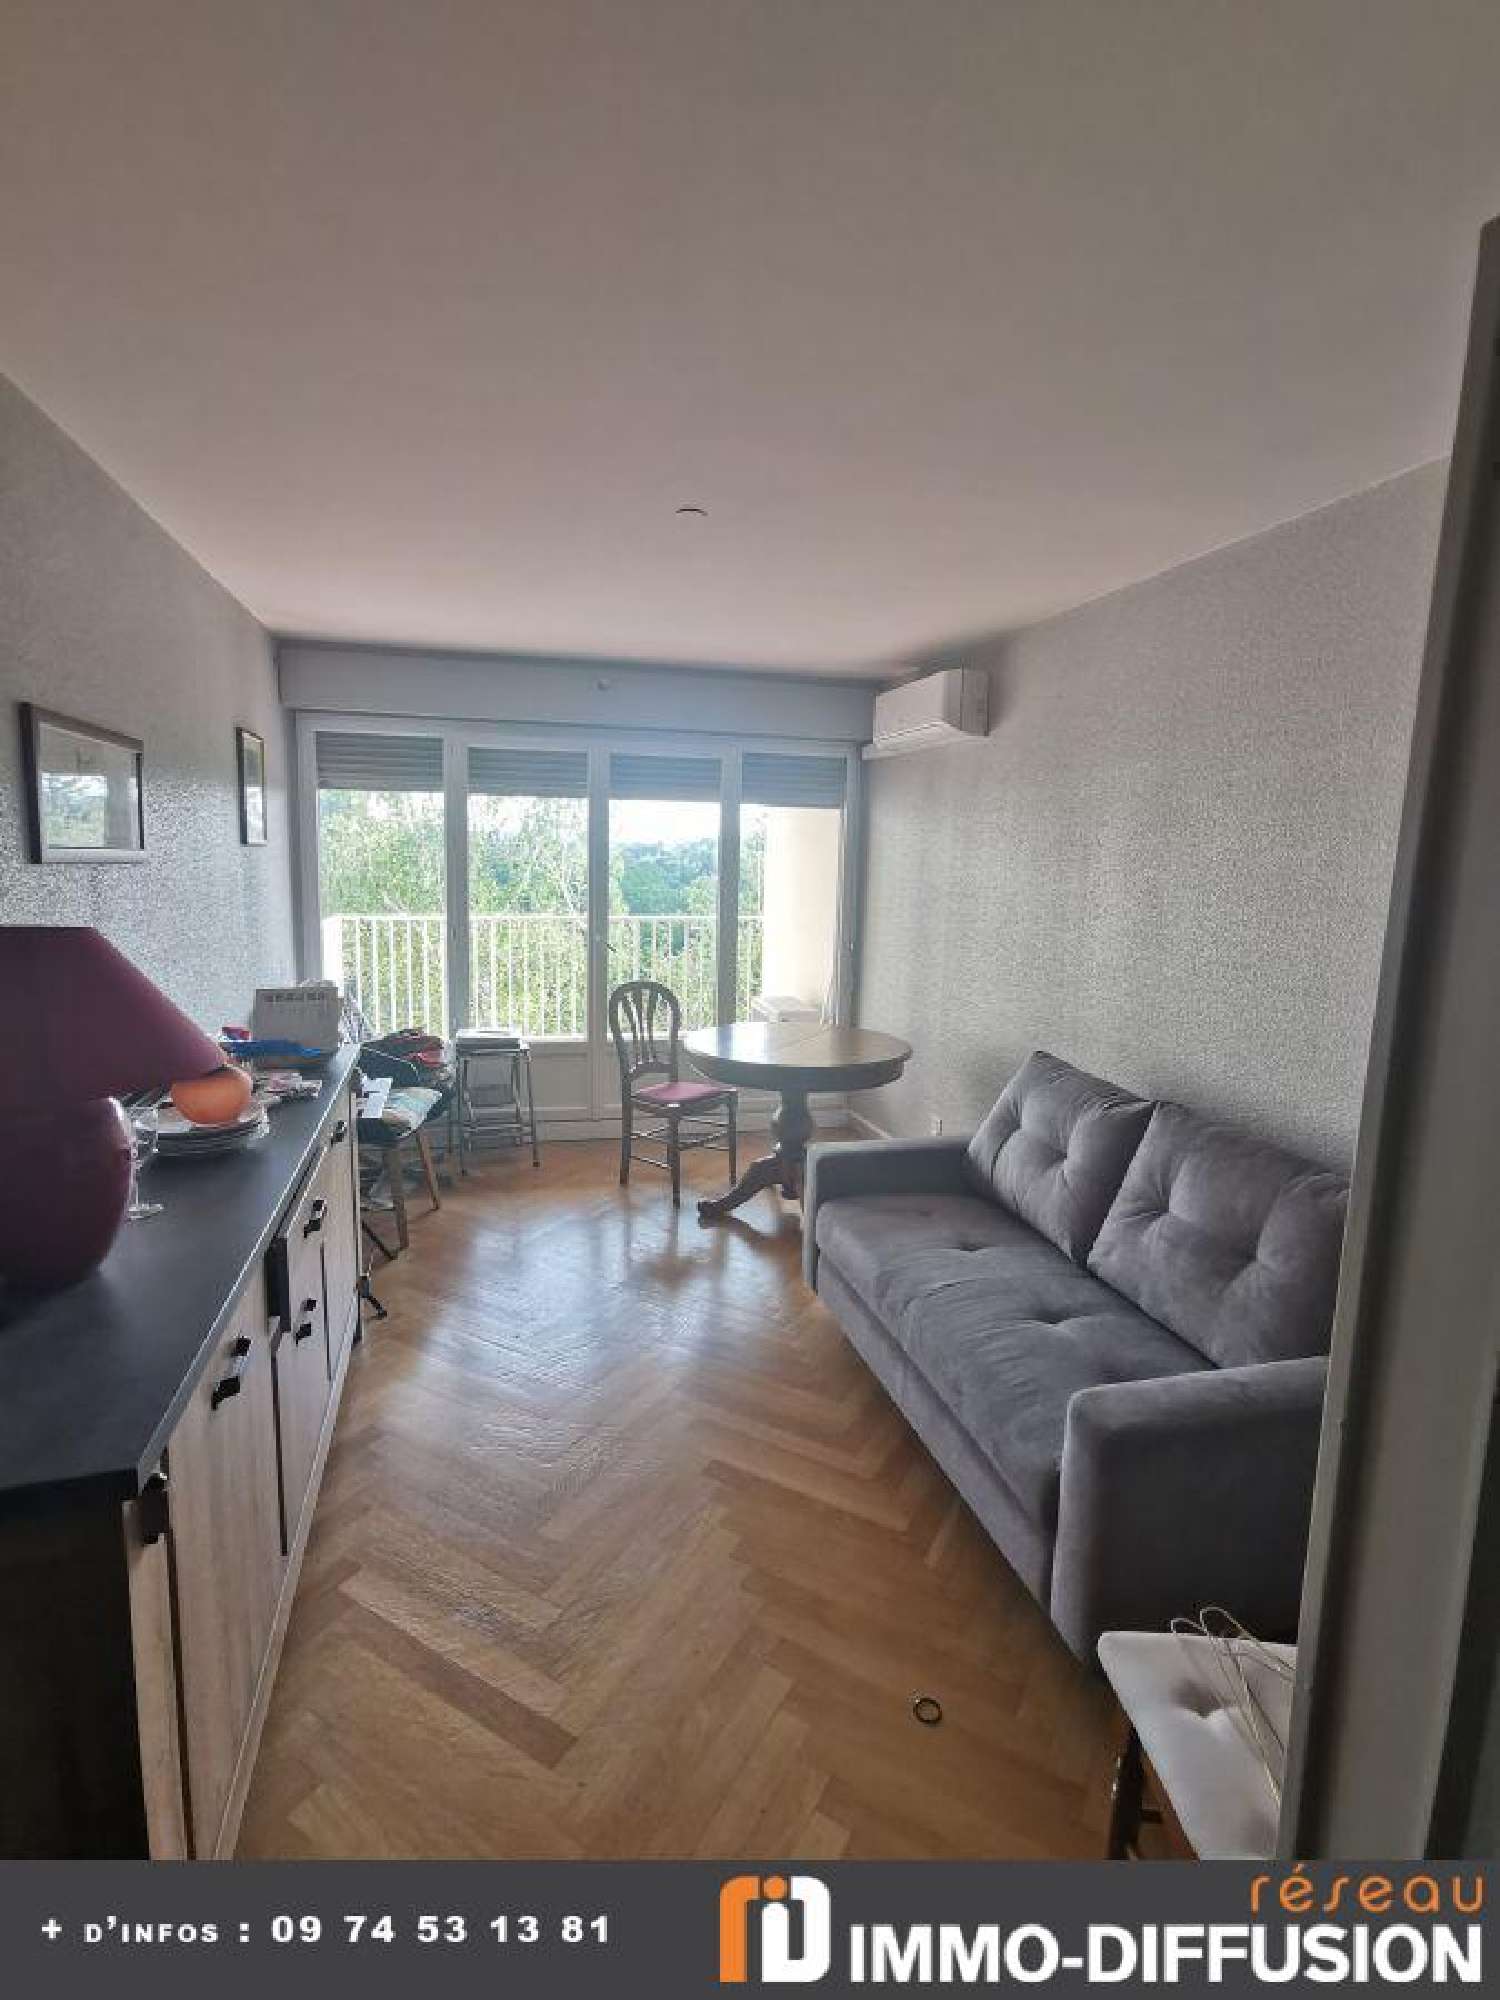  à vendre appartement Sainte-Foy-lès-Lyon Rhône 2